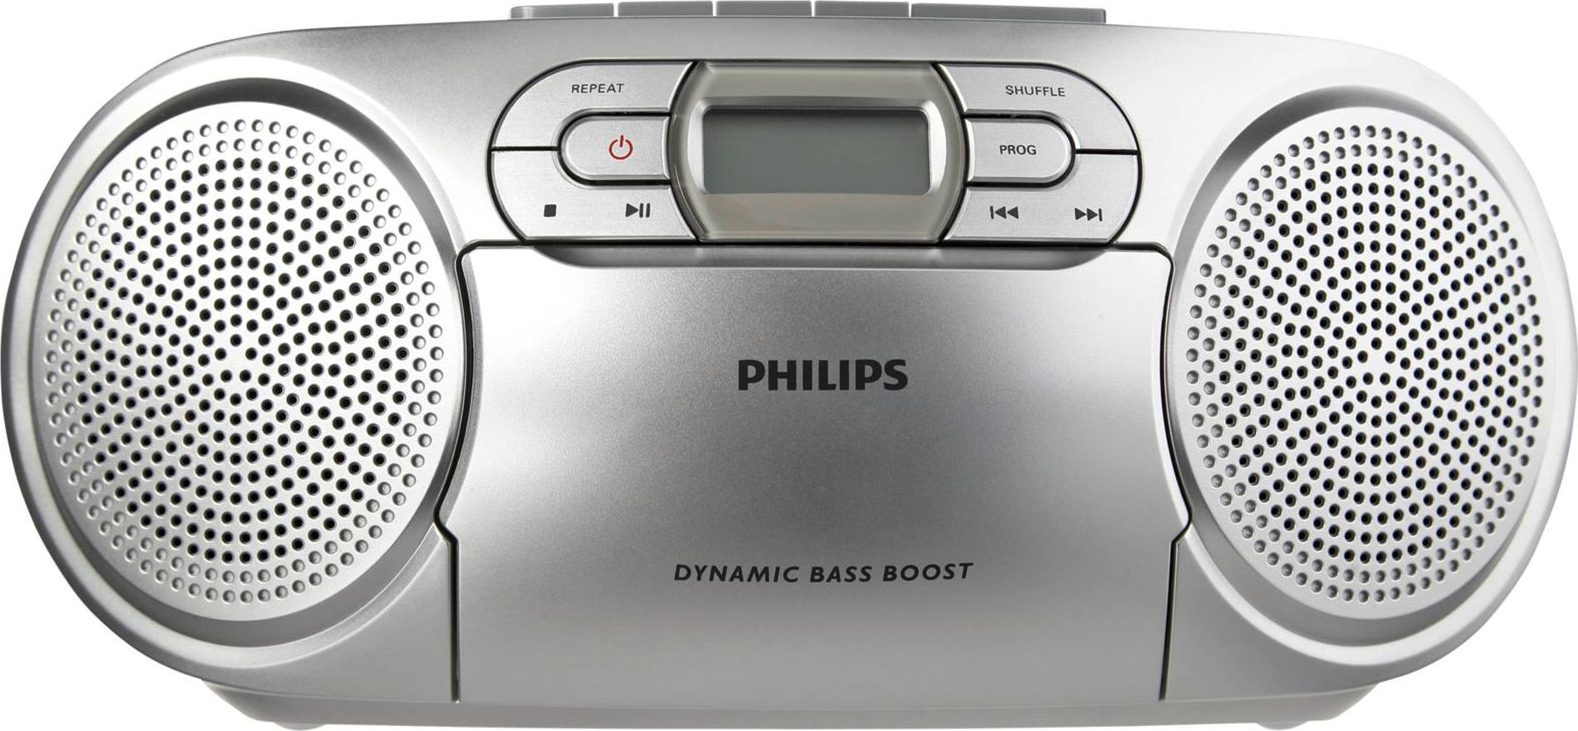 Philips Φορητό Ηχοσύστημα AZ127 με CD / Κασετόφωνο / Ραδιόφωνο σε Ασημί  Χρώμα